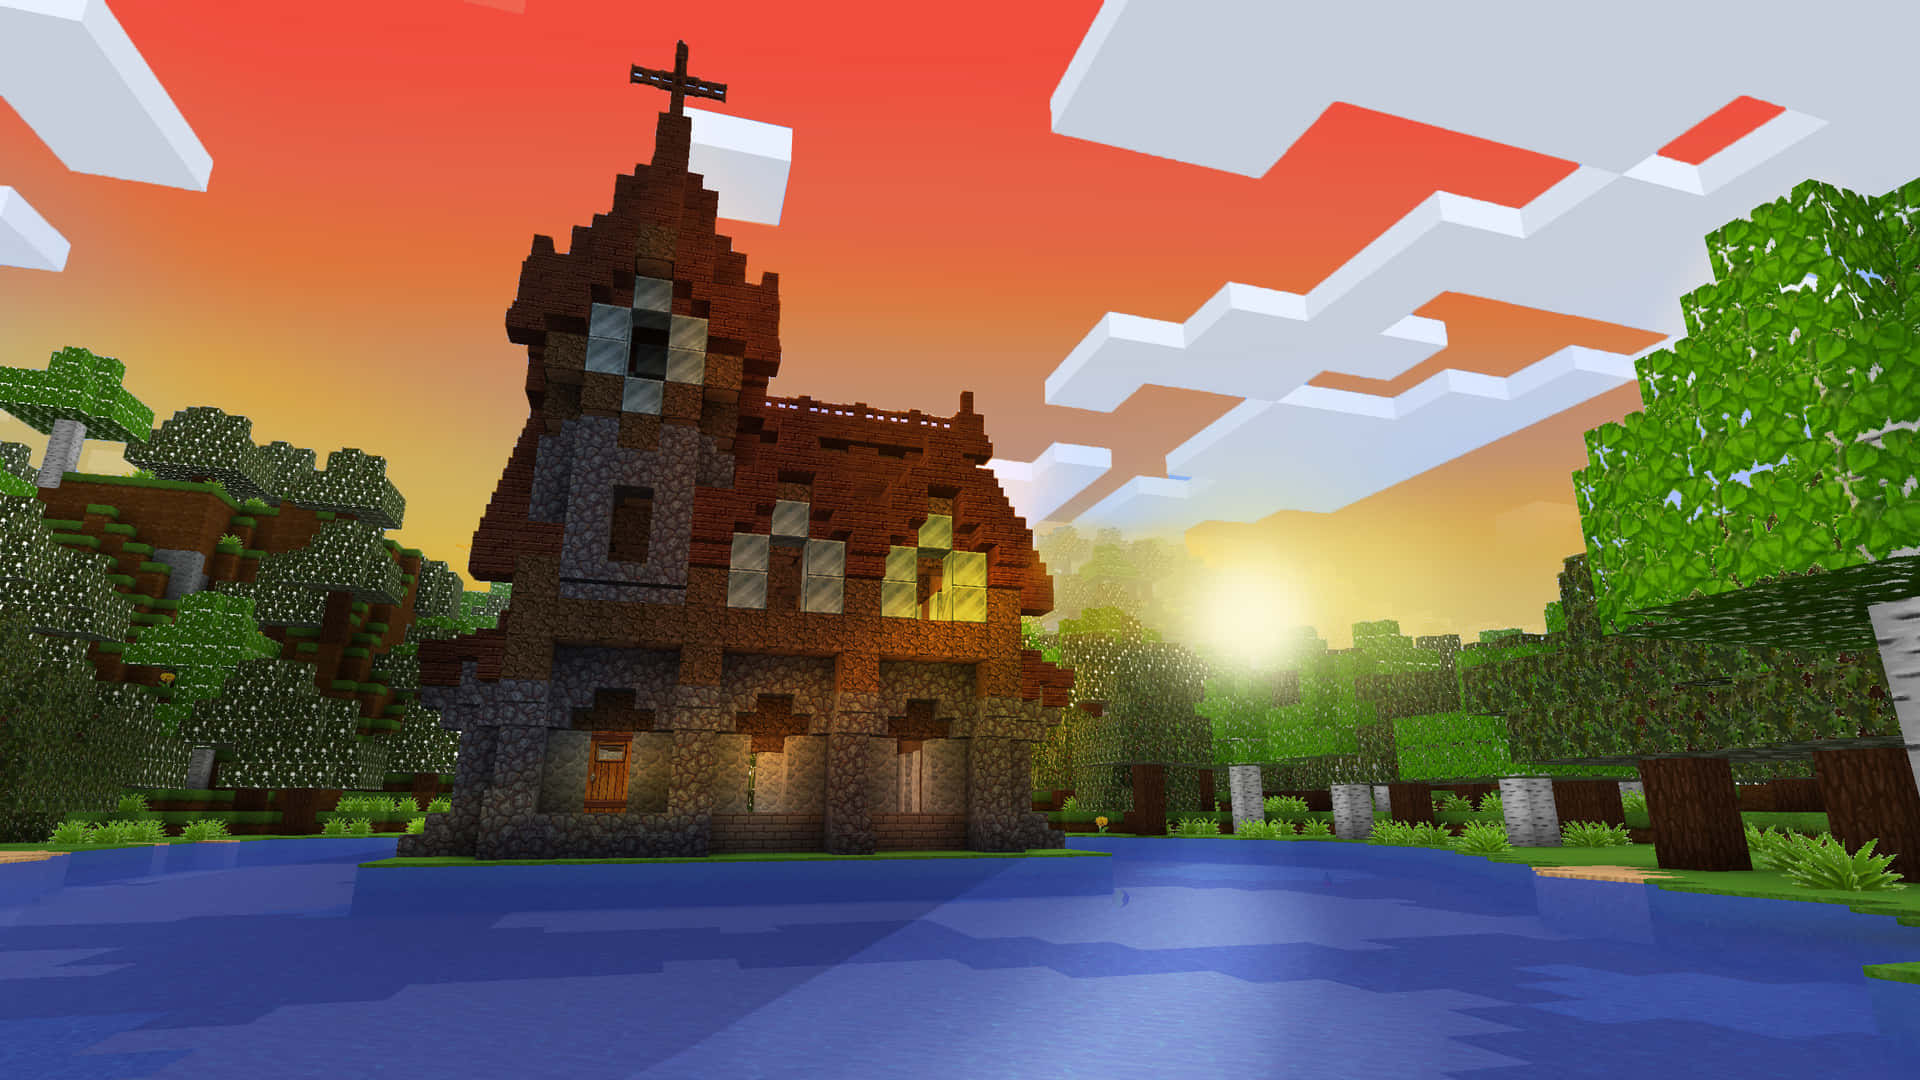 “Peaceful sunset in a Minecraft world” Wallpaper